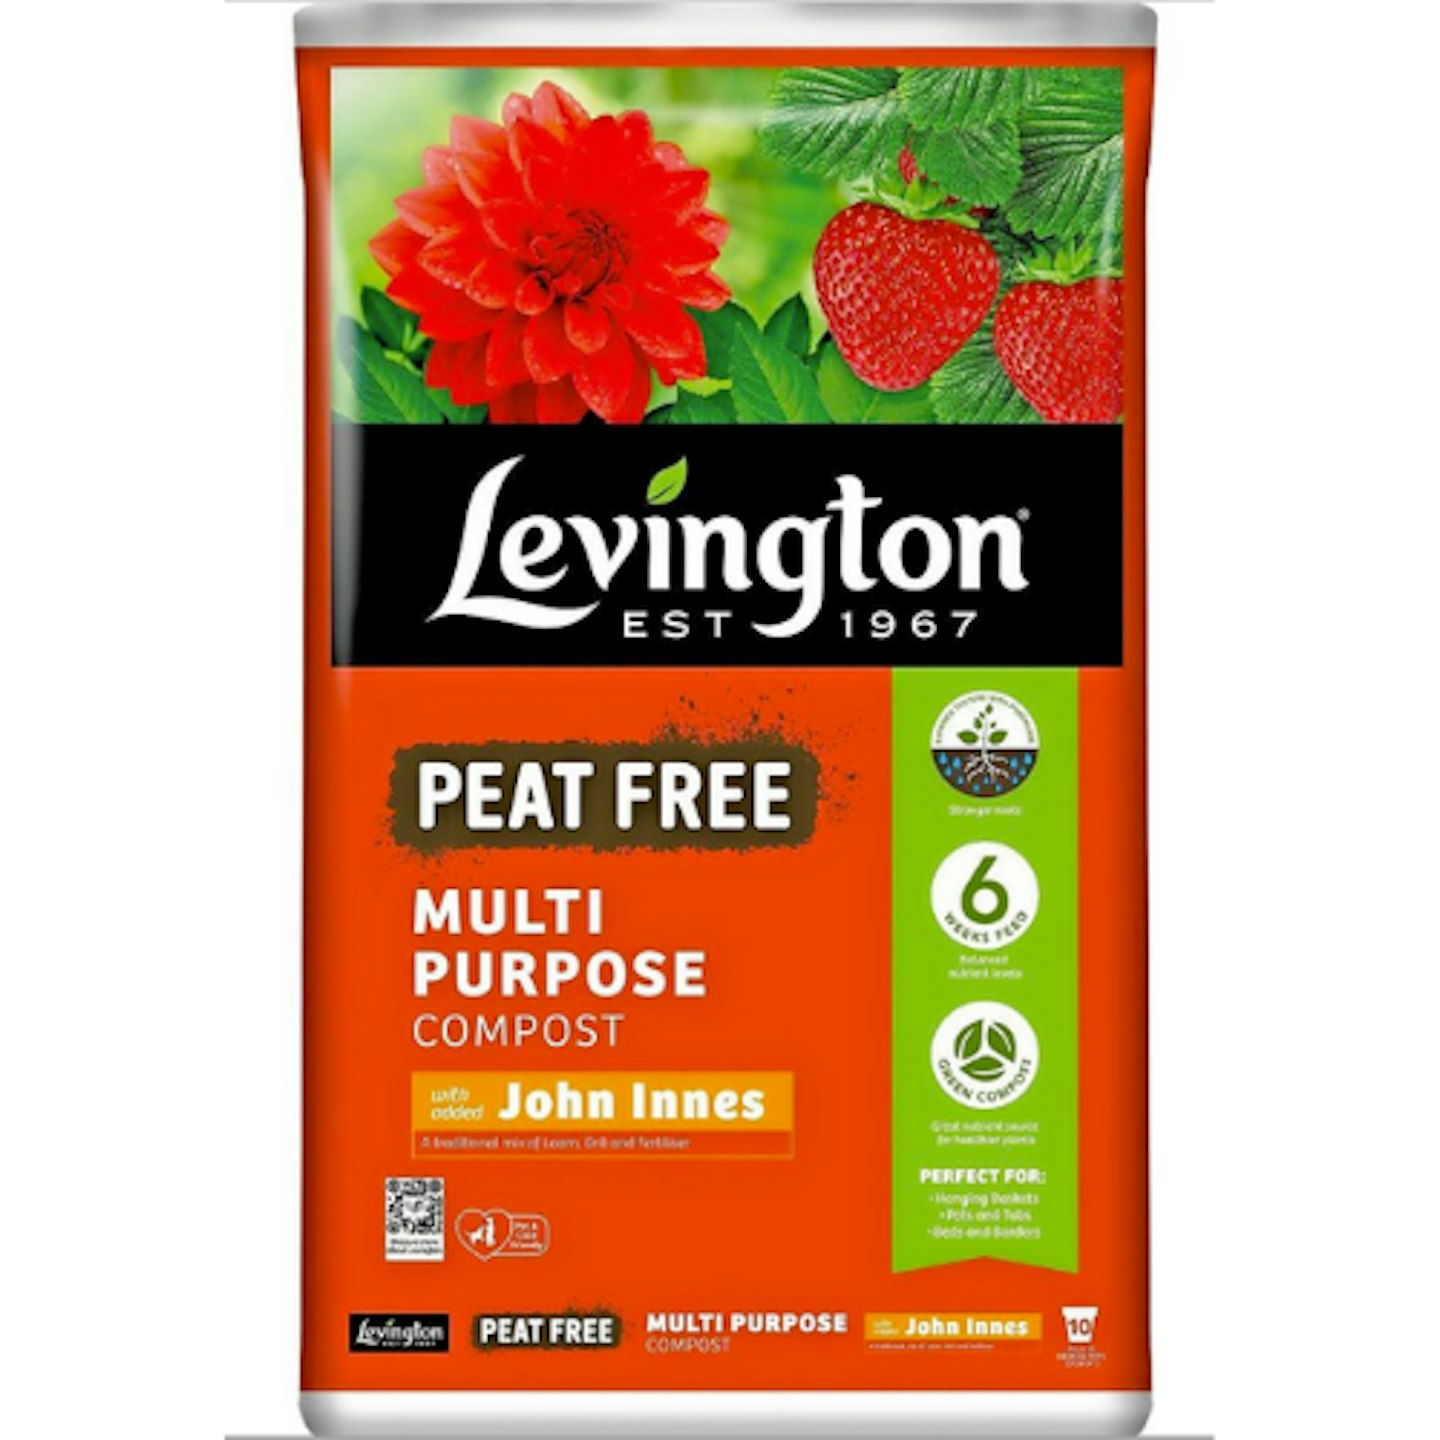 Levington Peat Free Multi Purpose with John Innes